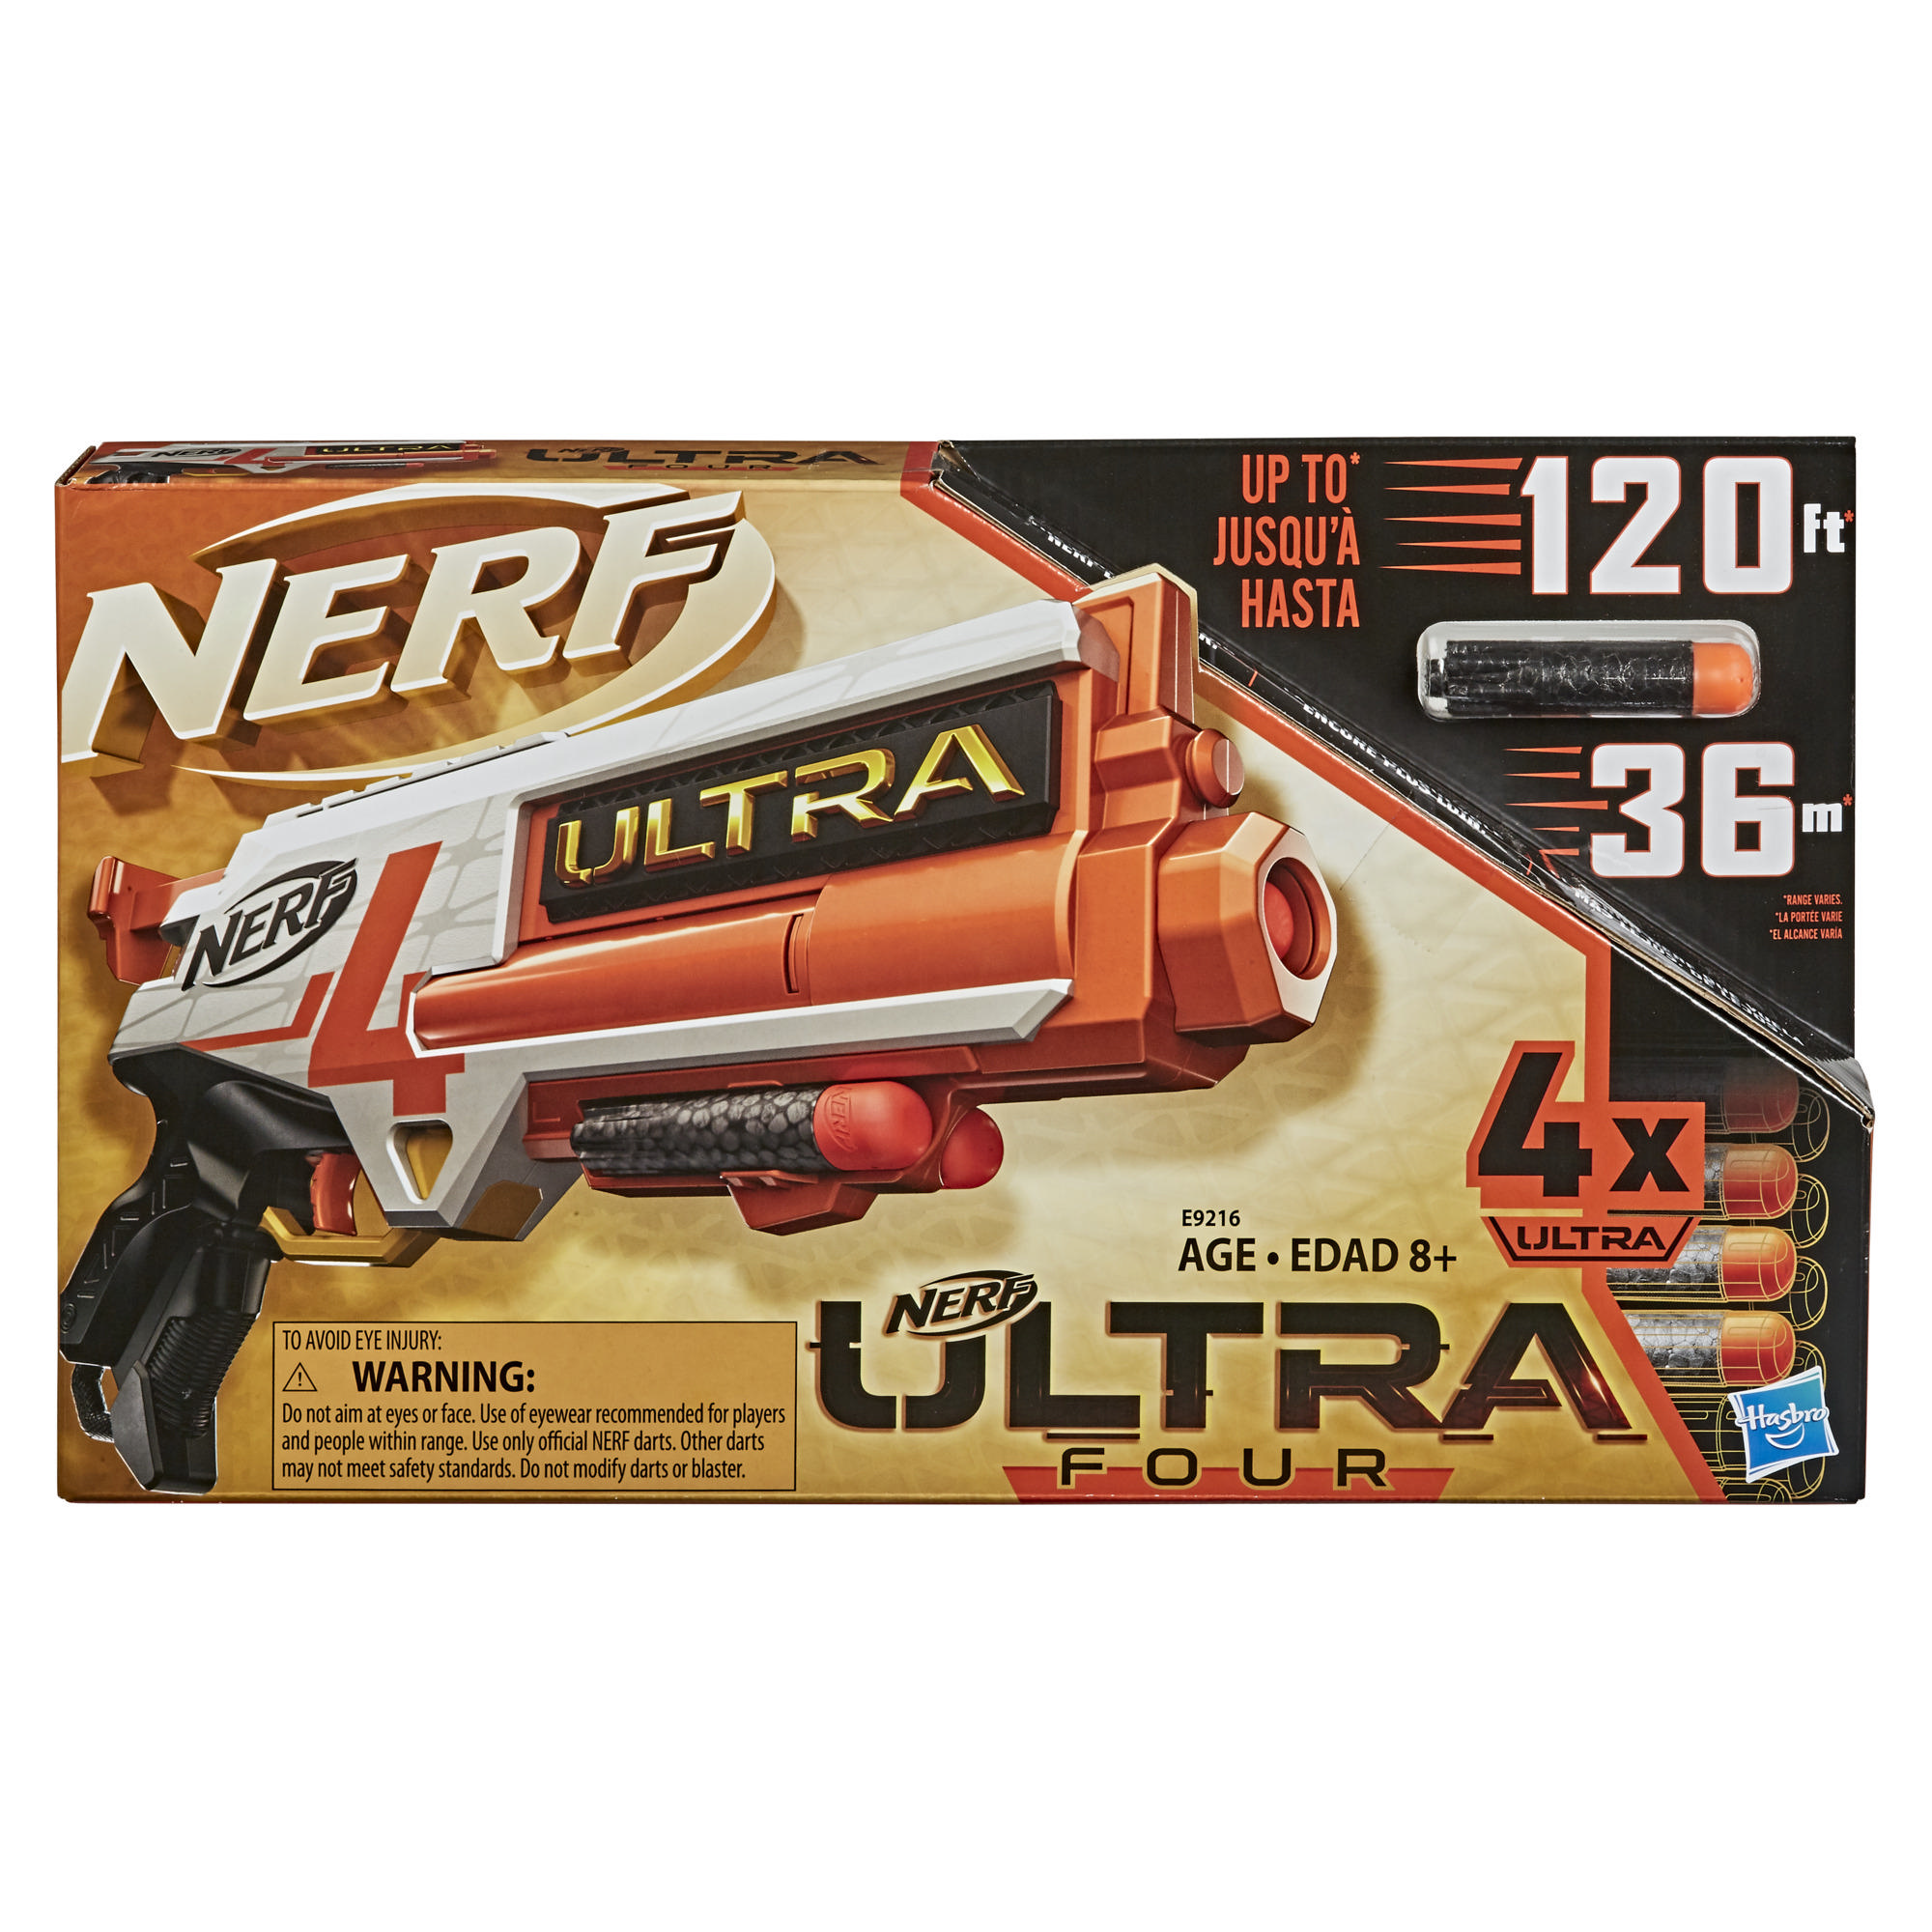 Nerf Ultra - Blaster Four, avec 4 fléchettes Nerf Ultra, compatible uniquement avec les fléchettes Nerf Ultra